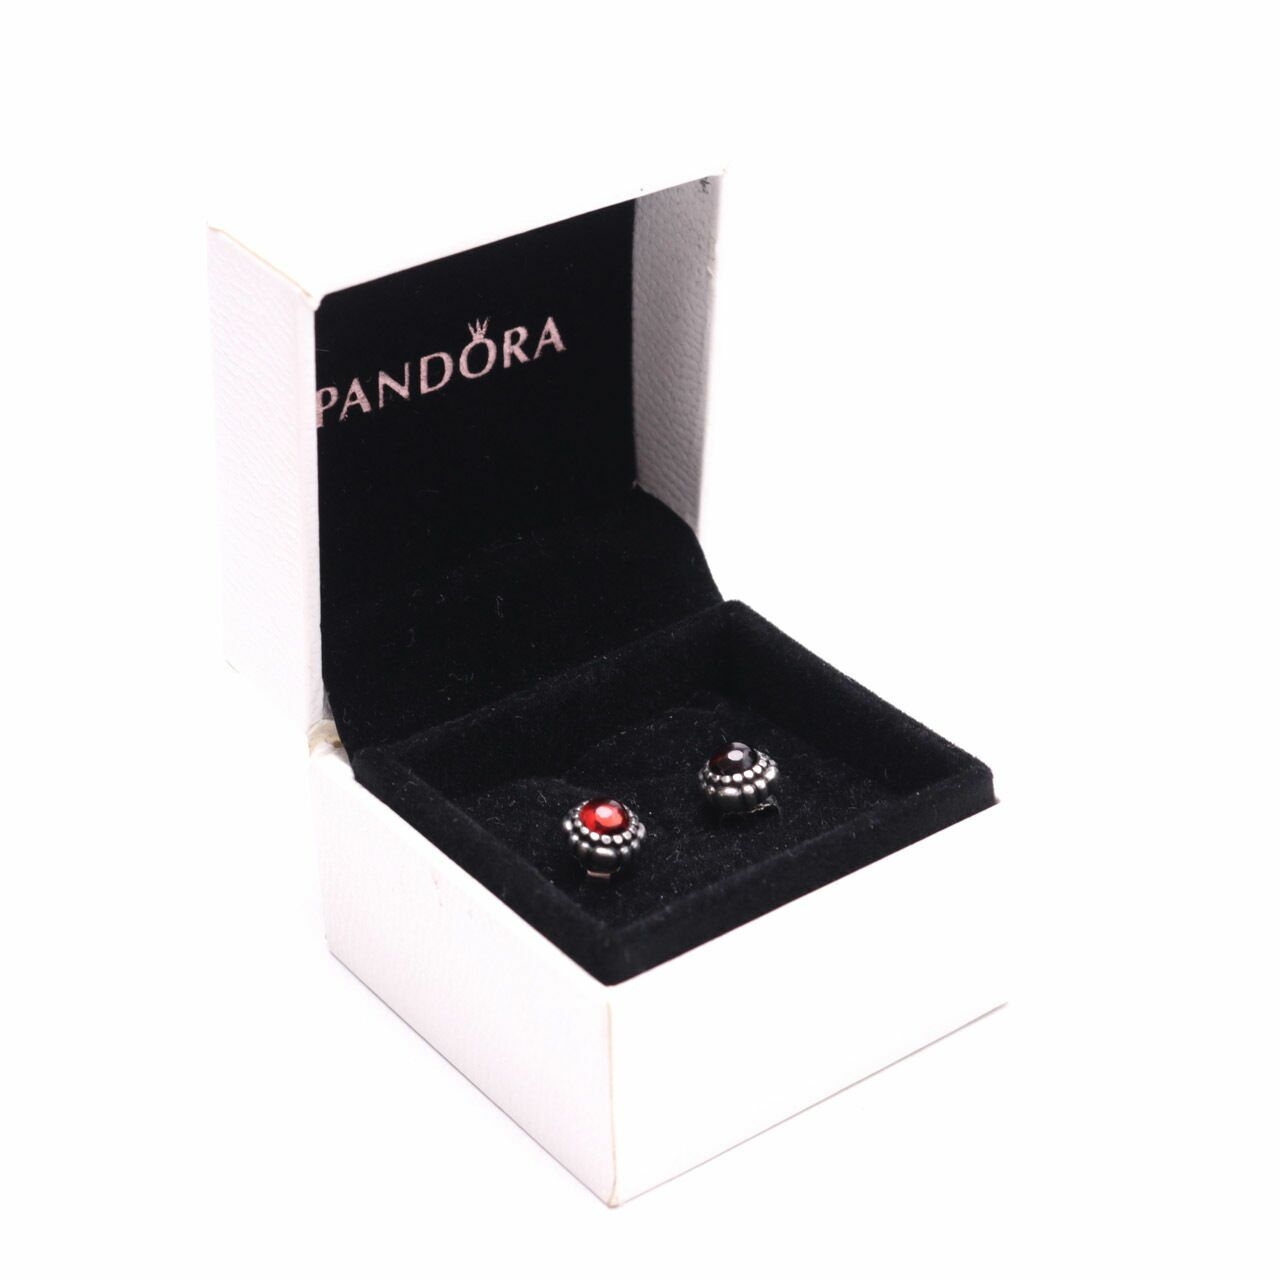 Pandora Red & Silver Earrings Jewelry